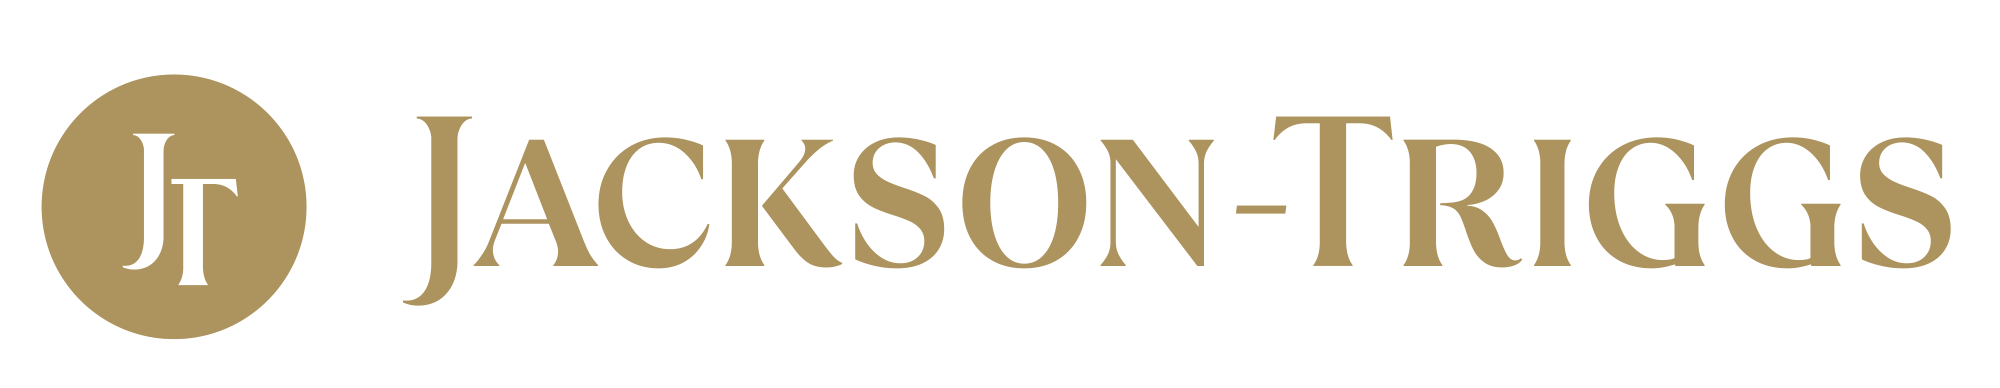 Jackson-Triggs logo